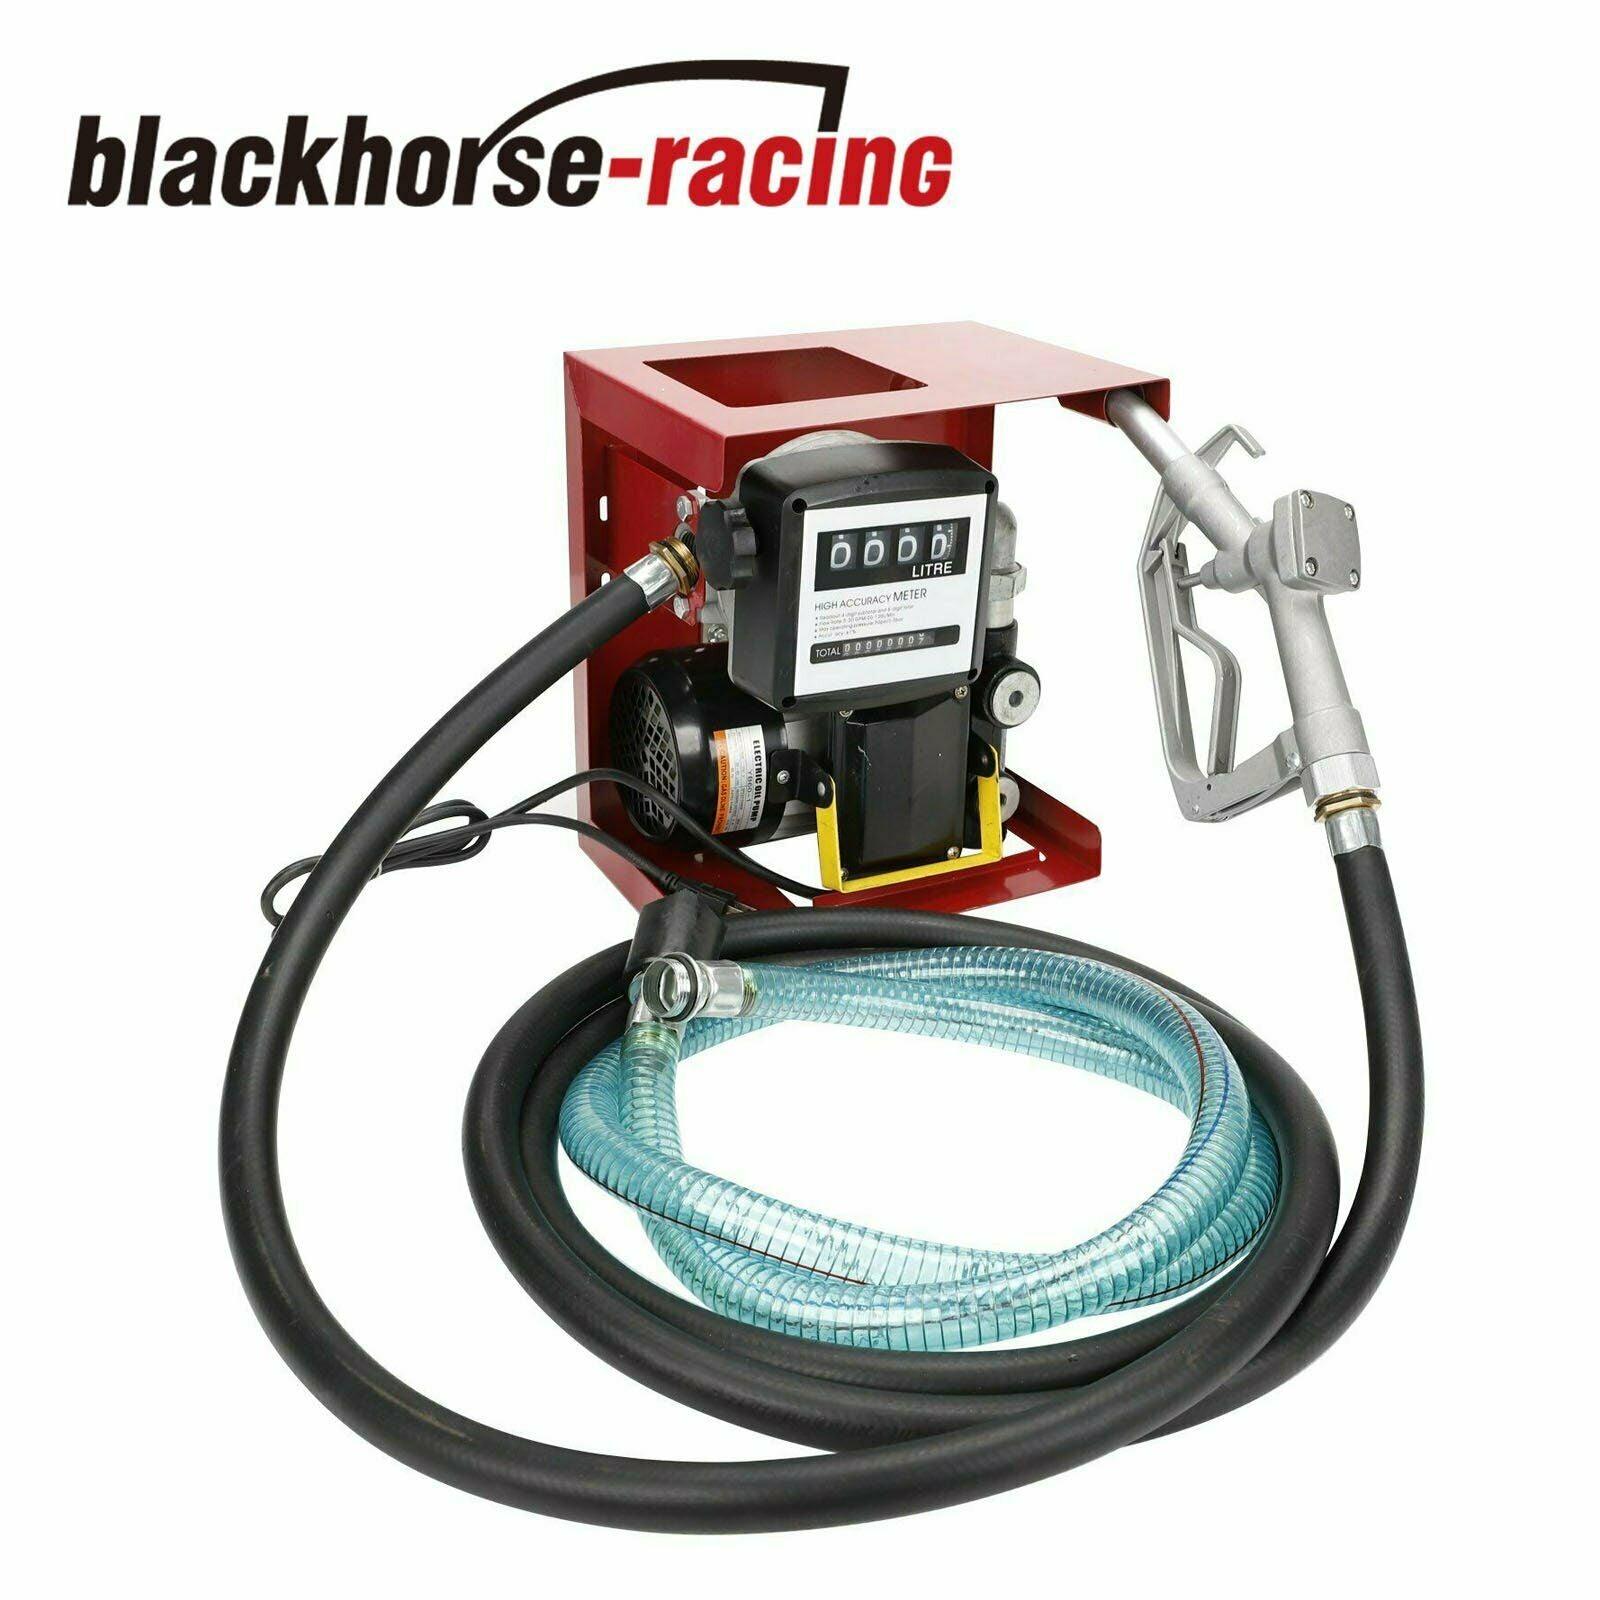 New 110V Electric Oil Fuel Diesel Gas Transfer Pump W/Meter 13' Hose Manual - www.blackhorse-racing.com